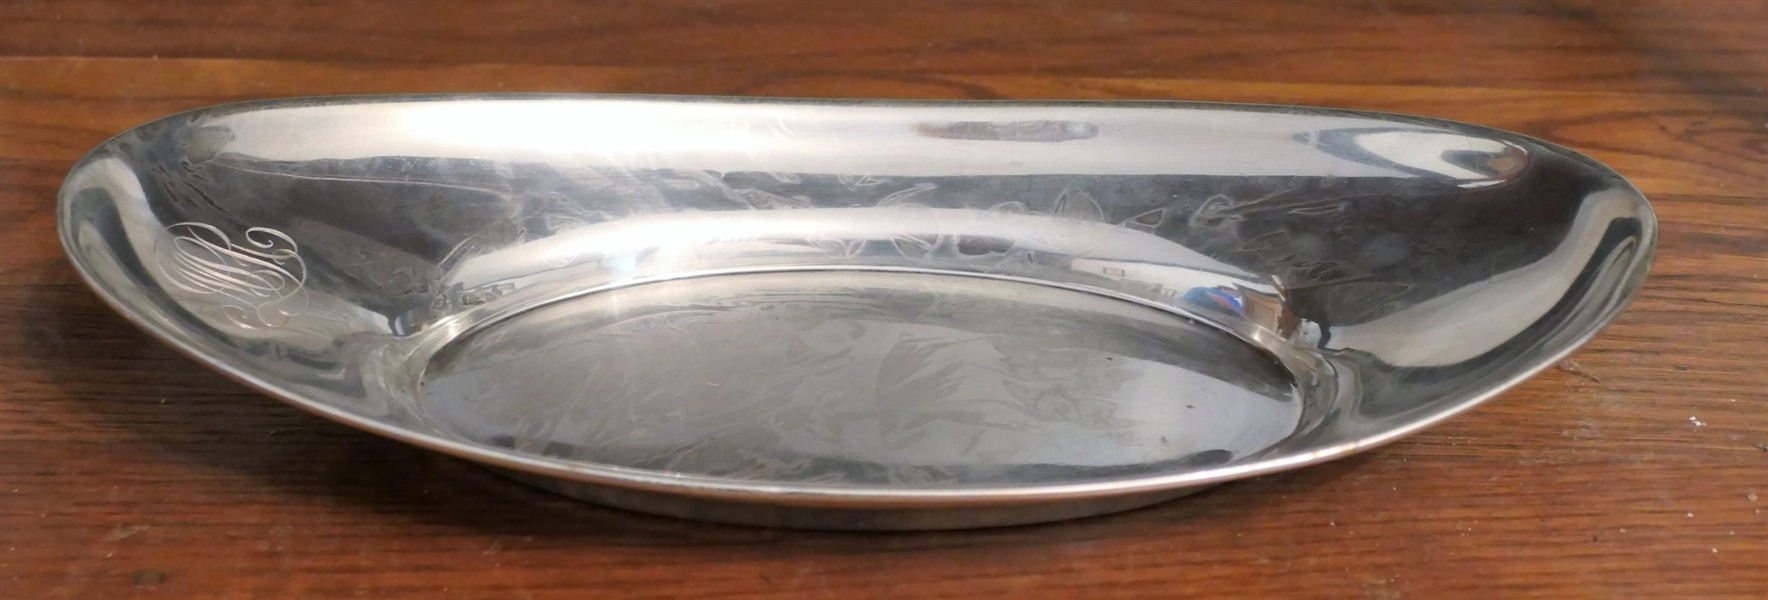 Gorham Sterling Silver Oval Dish - Number 4463 - Monogrammed - Measuring 12" by 6" 